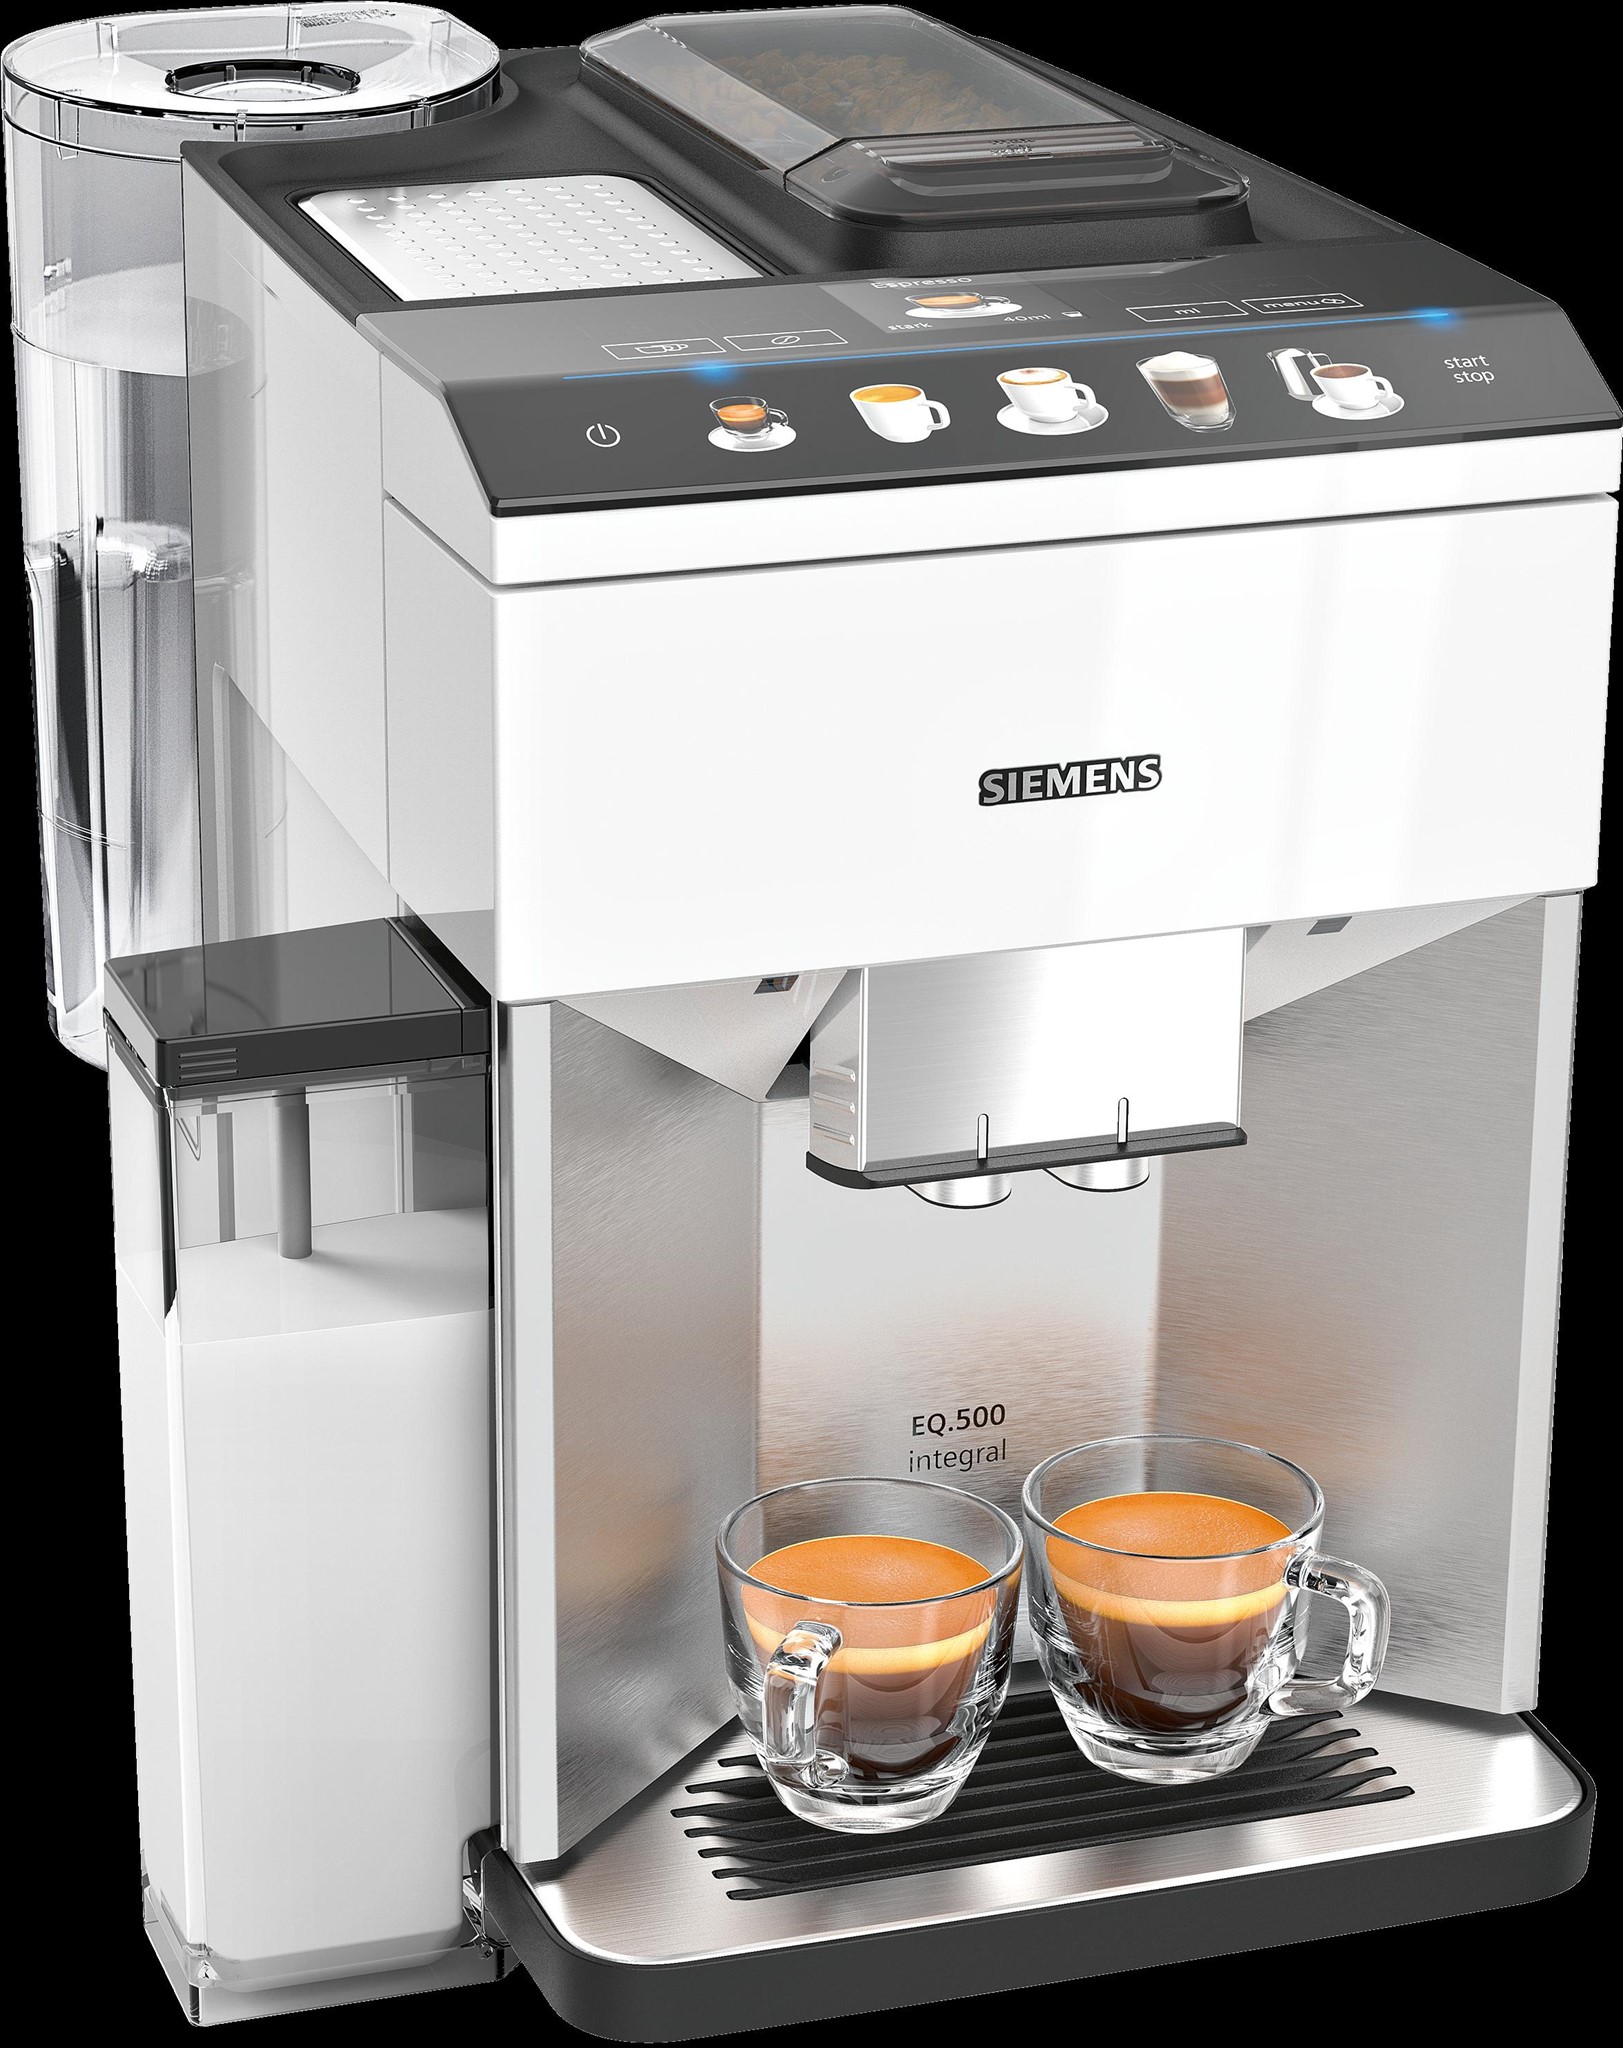 Siemens Kaffee-Vollautomat EQ.500 integral Edelstahl, TQ507D02, GmbH 4242003837467-Silvertech